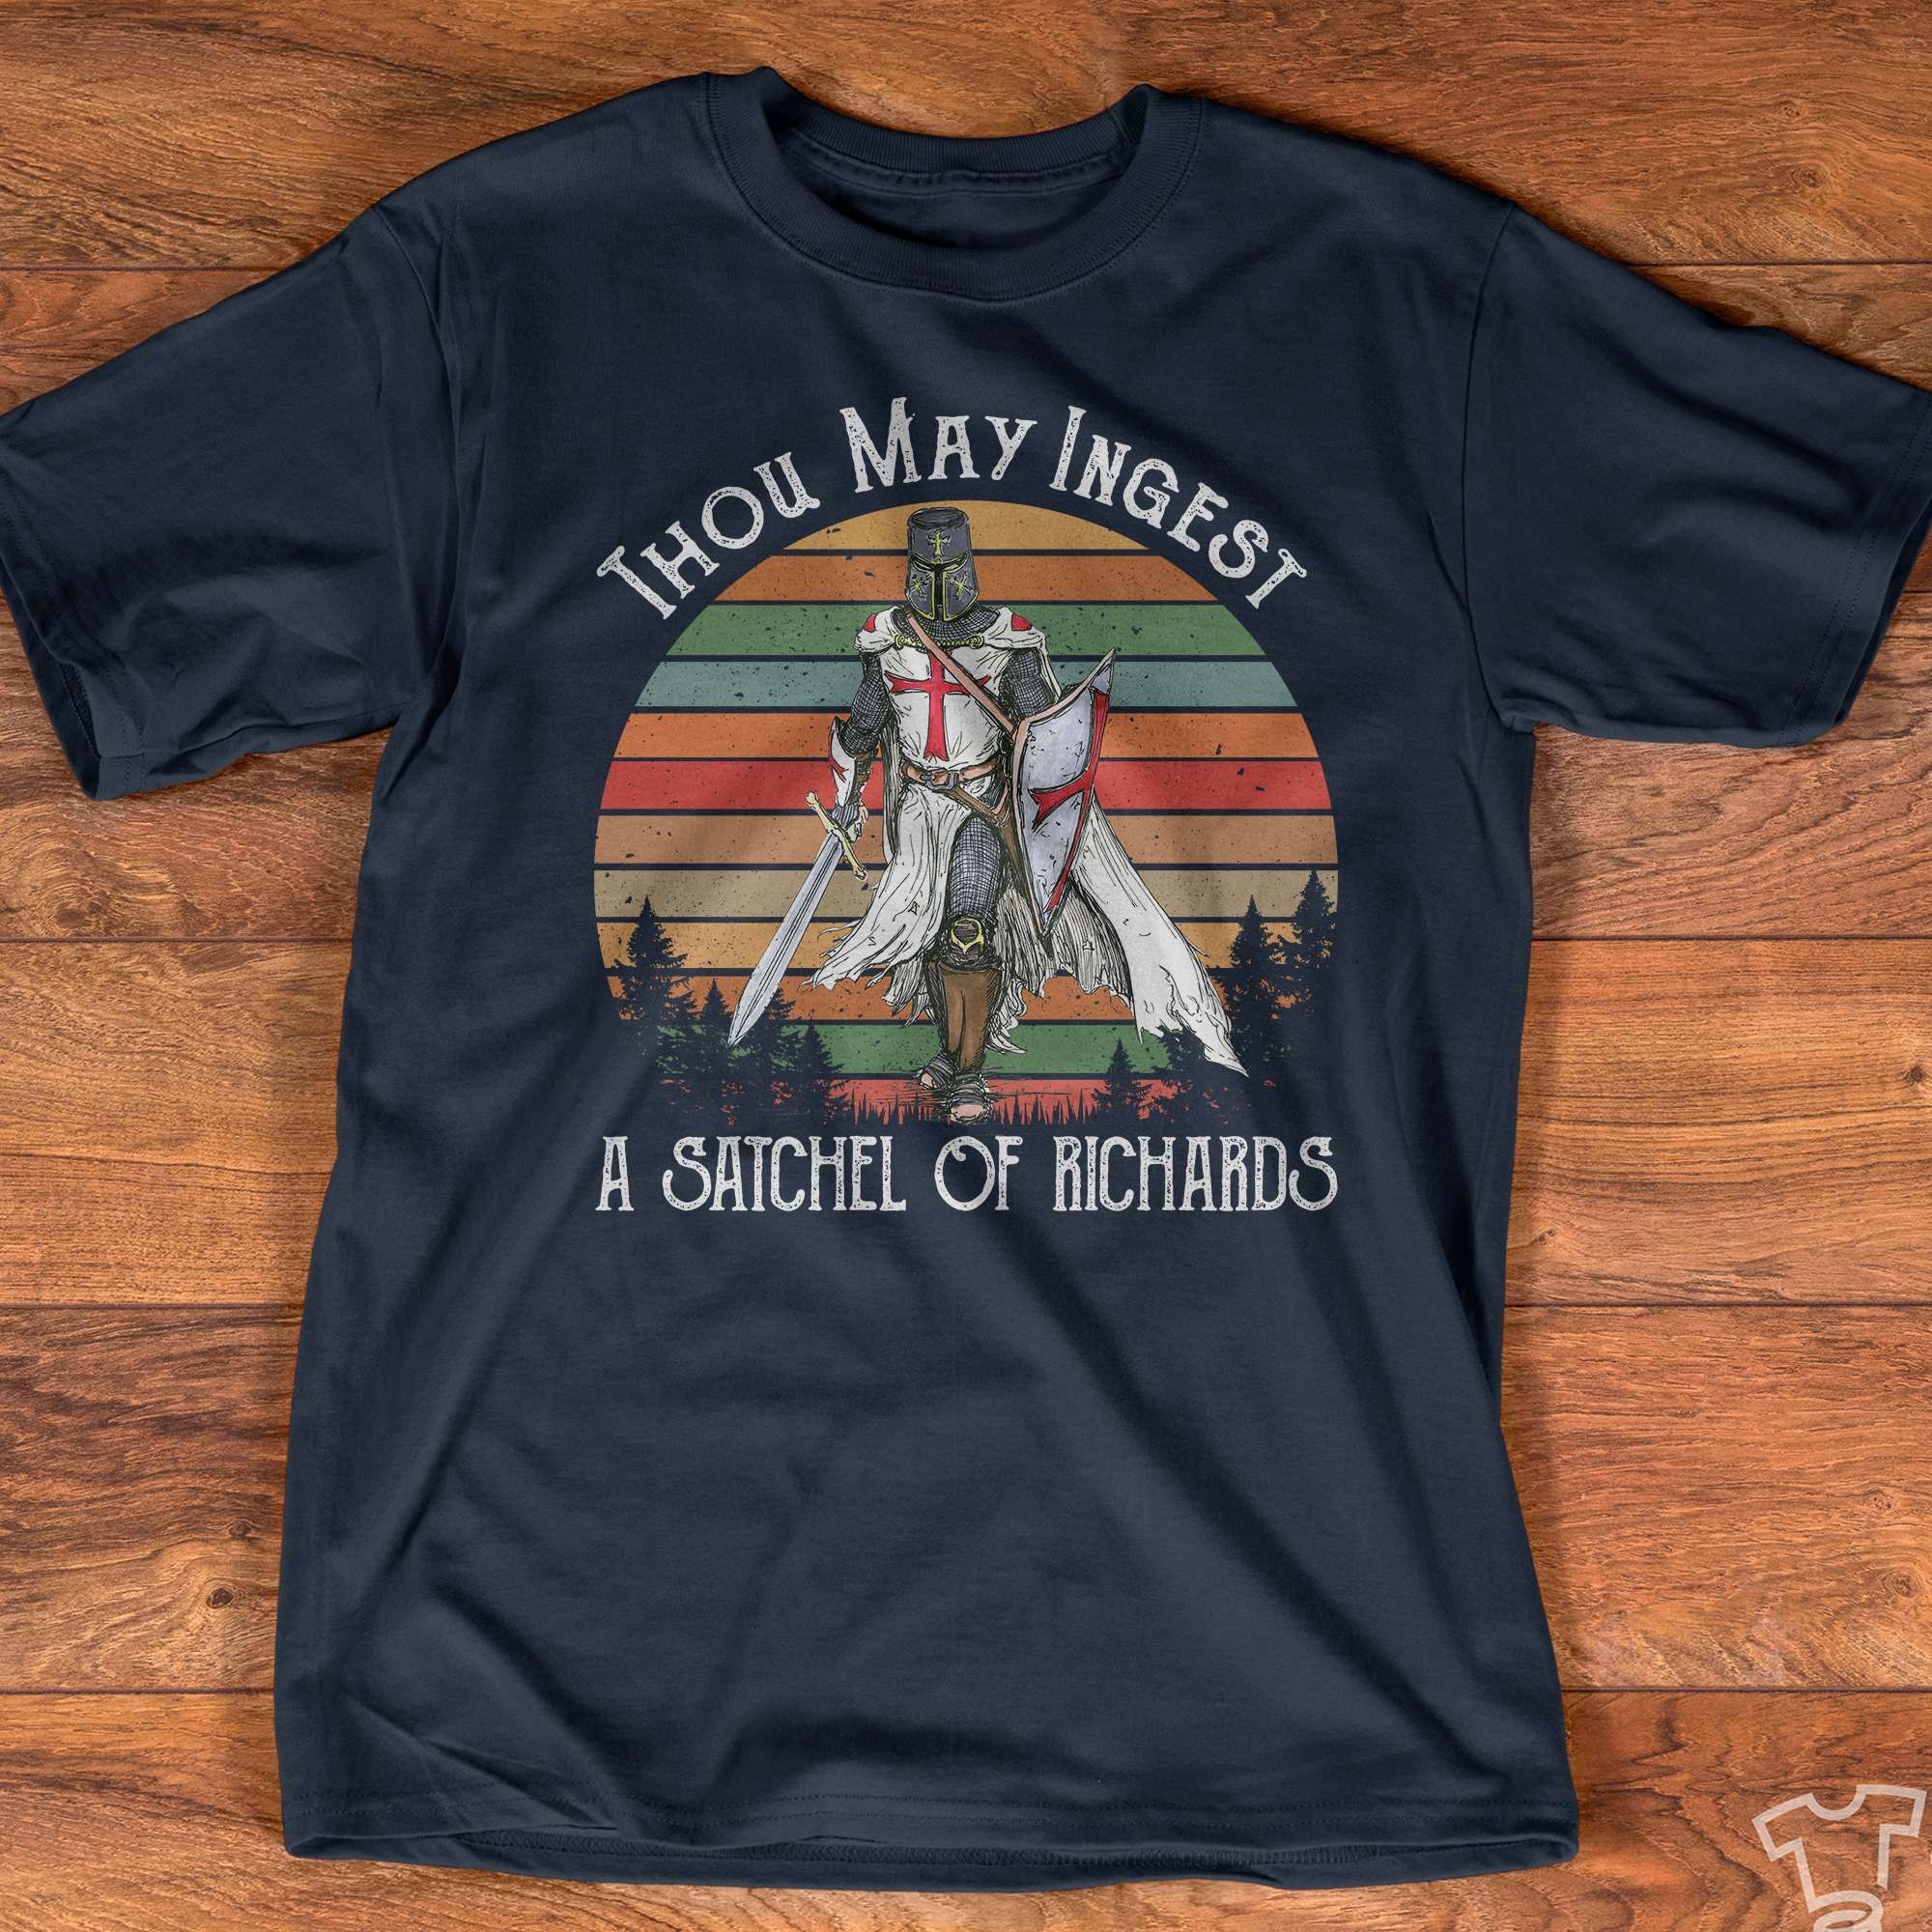 Thou may ingest, a Satchel of Richards - England knight